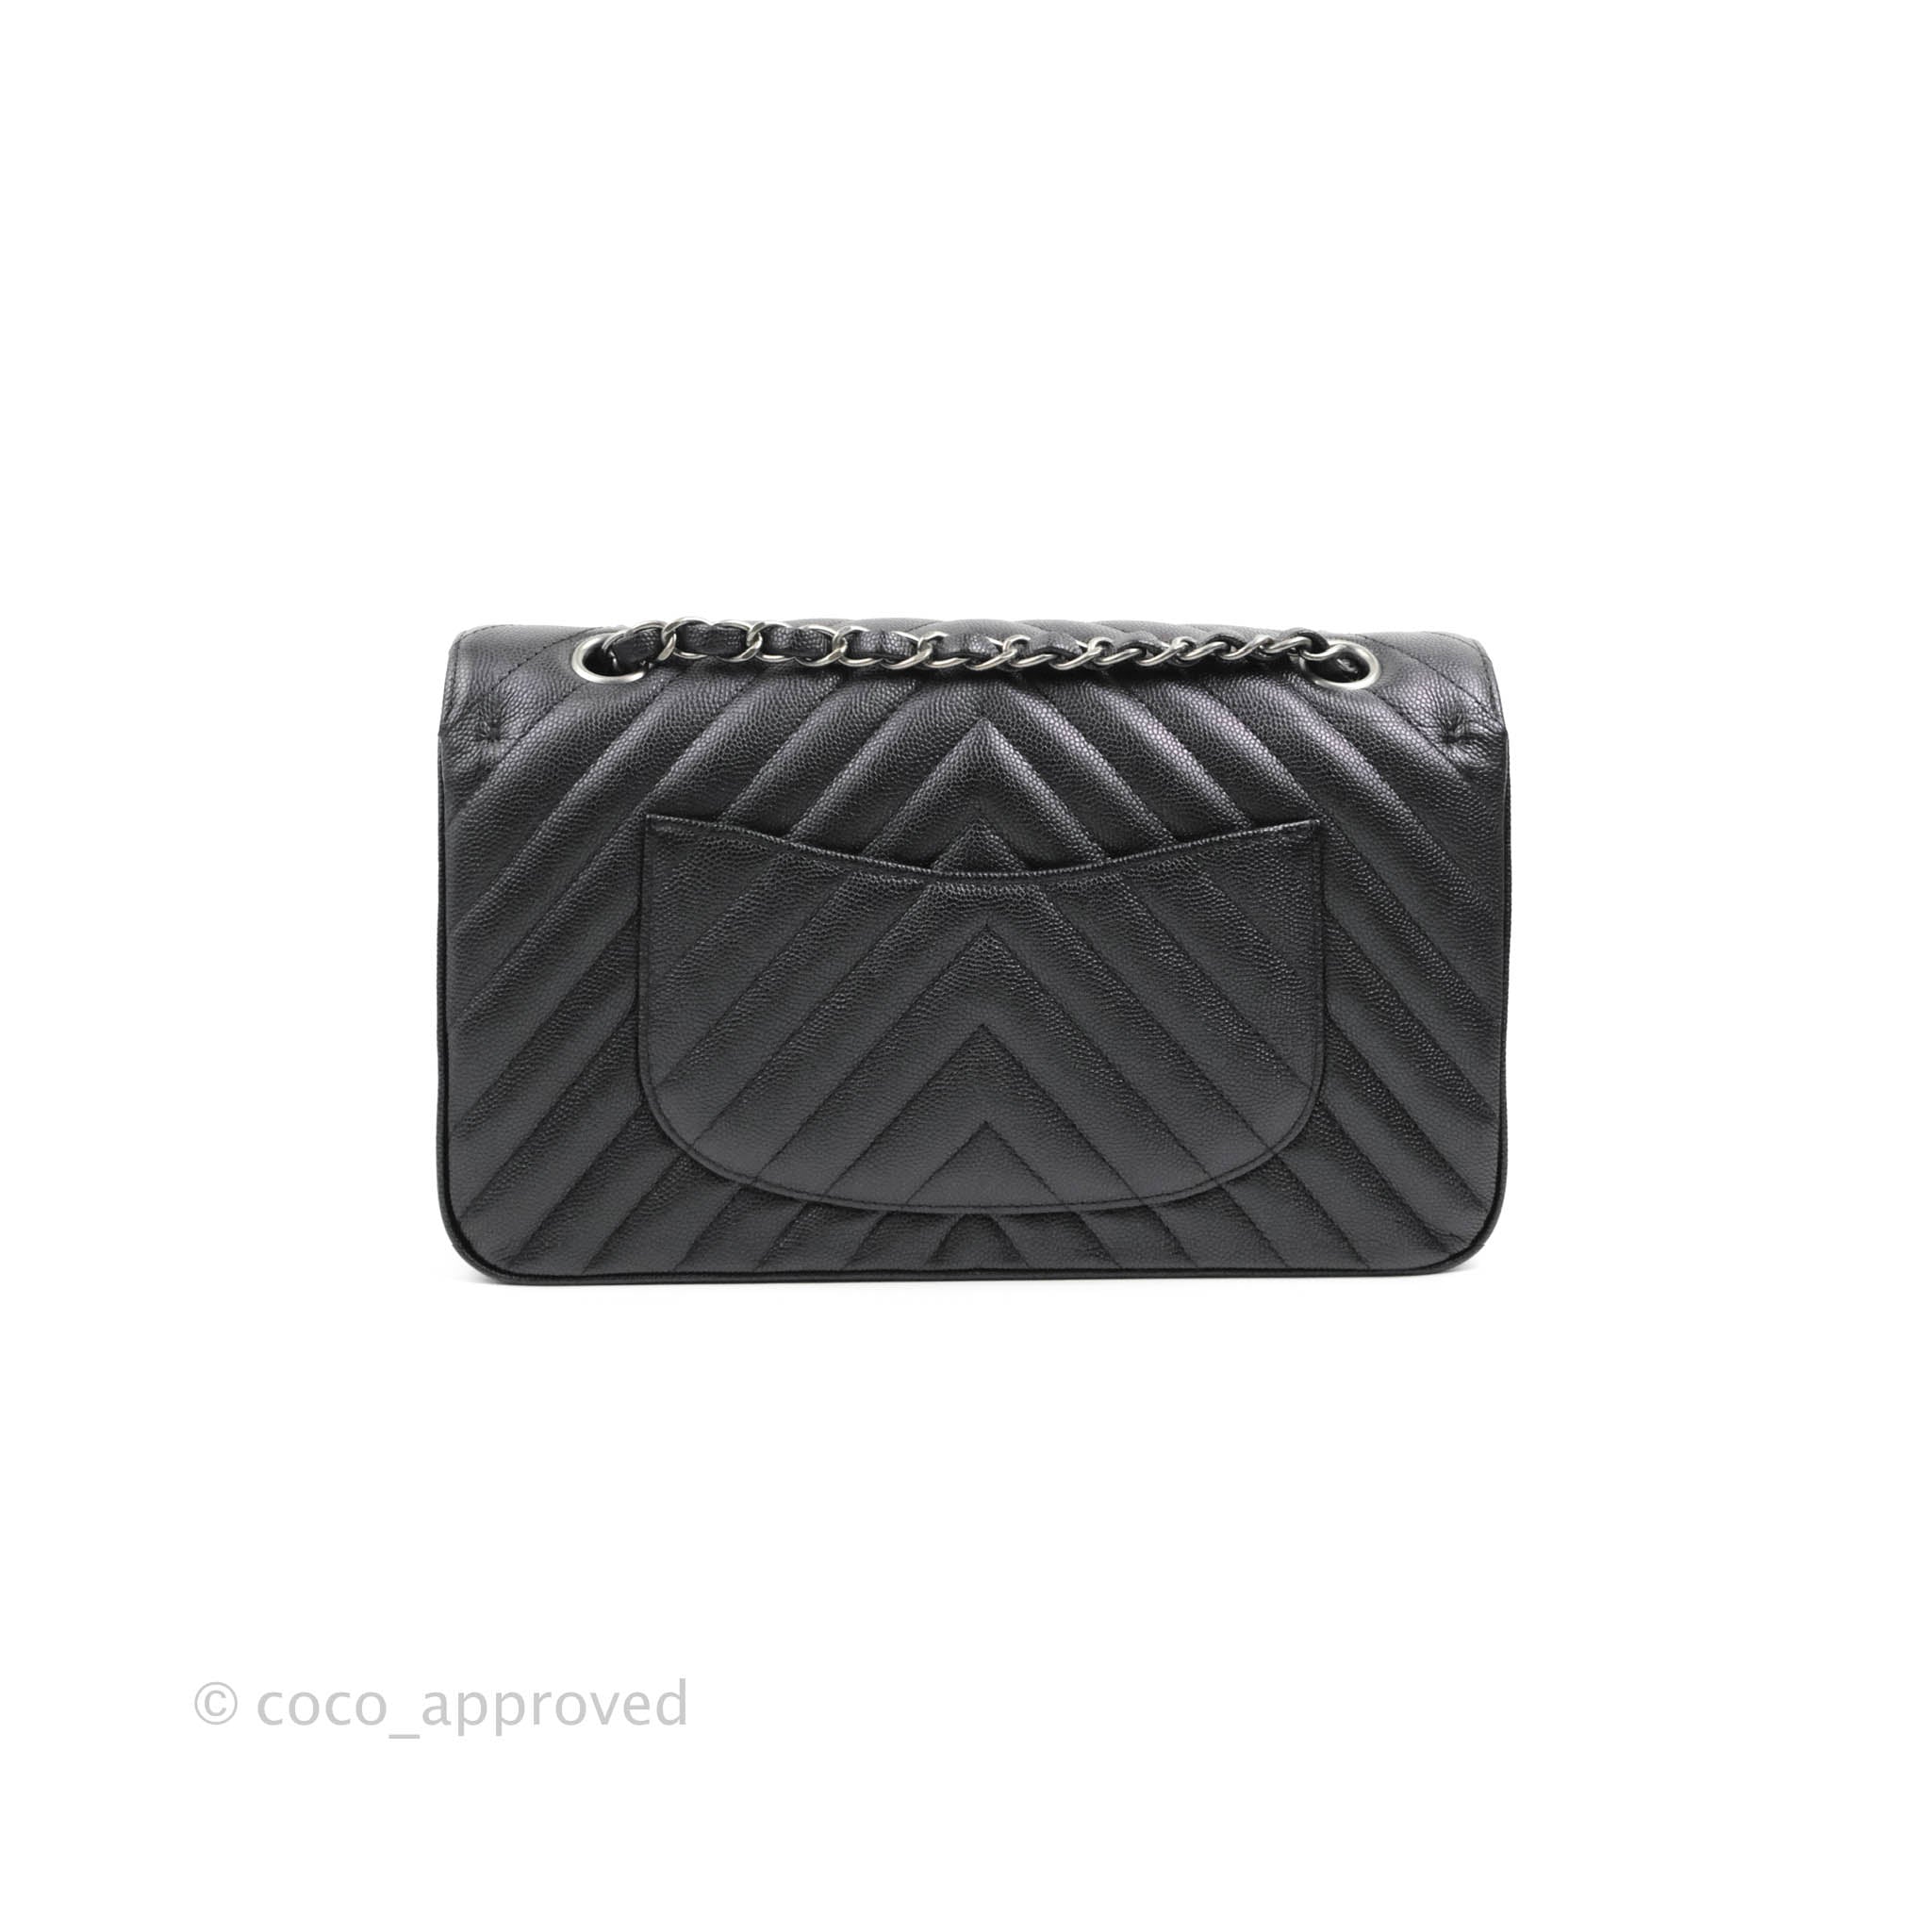 Chanel Medium Zip Around Wallet Purse in Iridescent Black Caviar with Shiny  Silver Ruthenium Hardware - SOLD